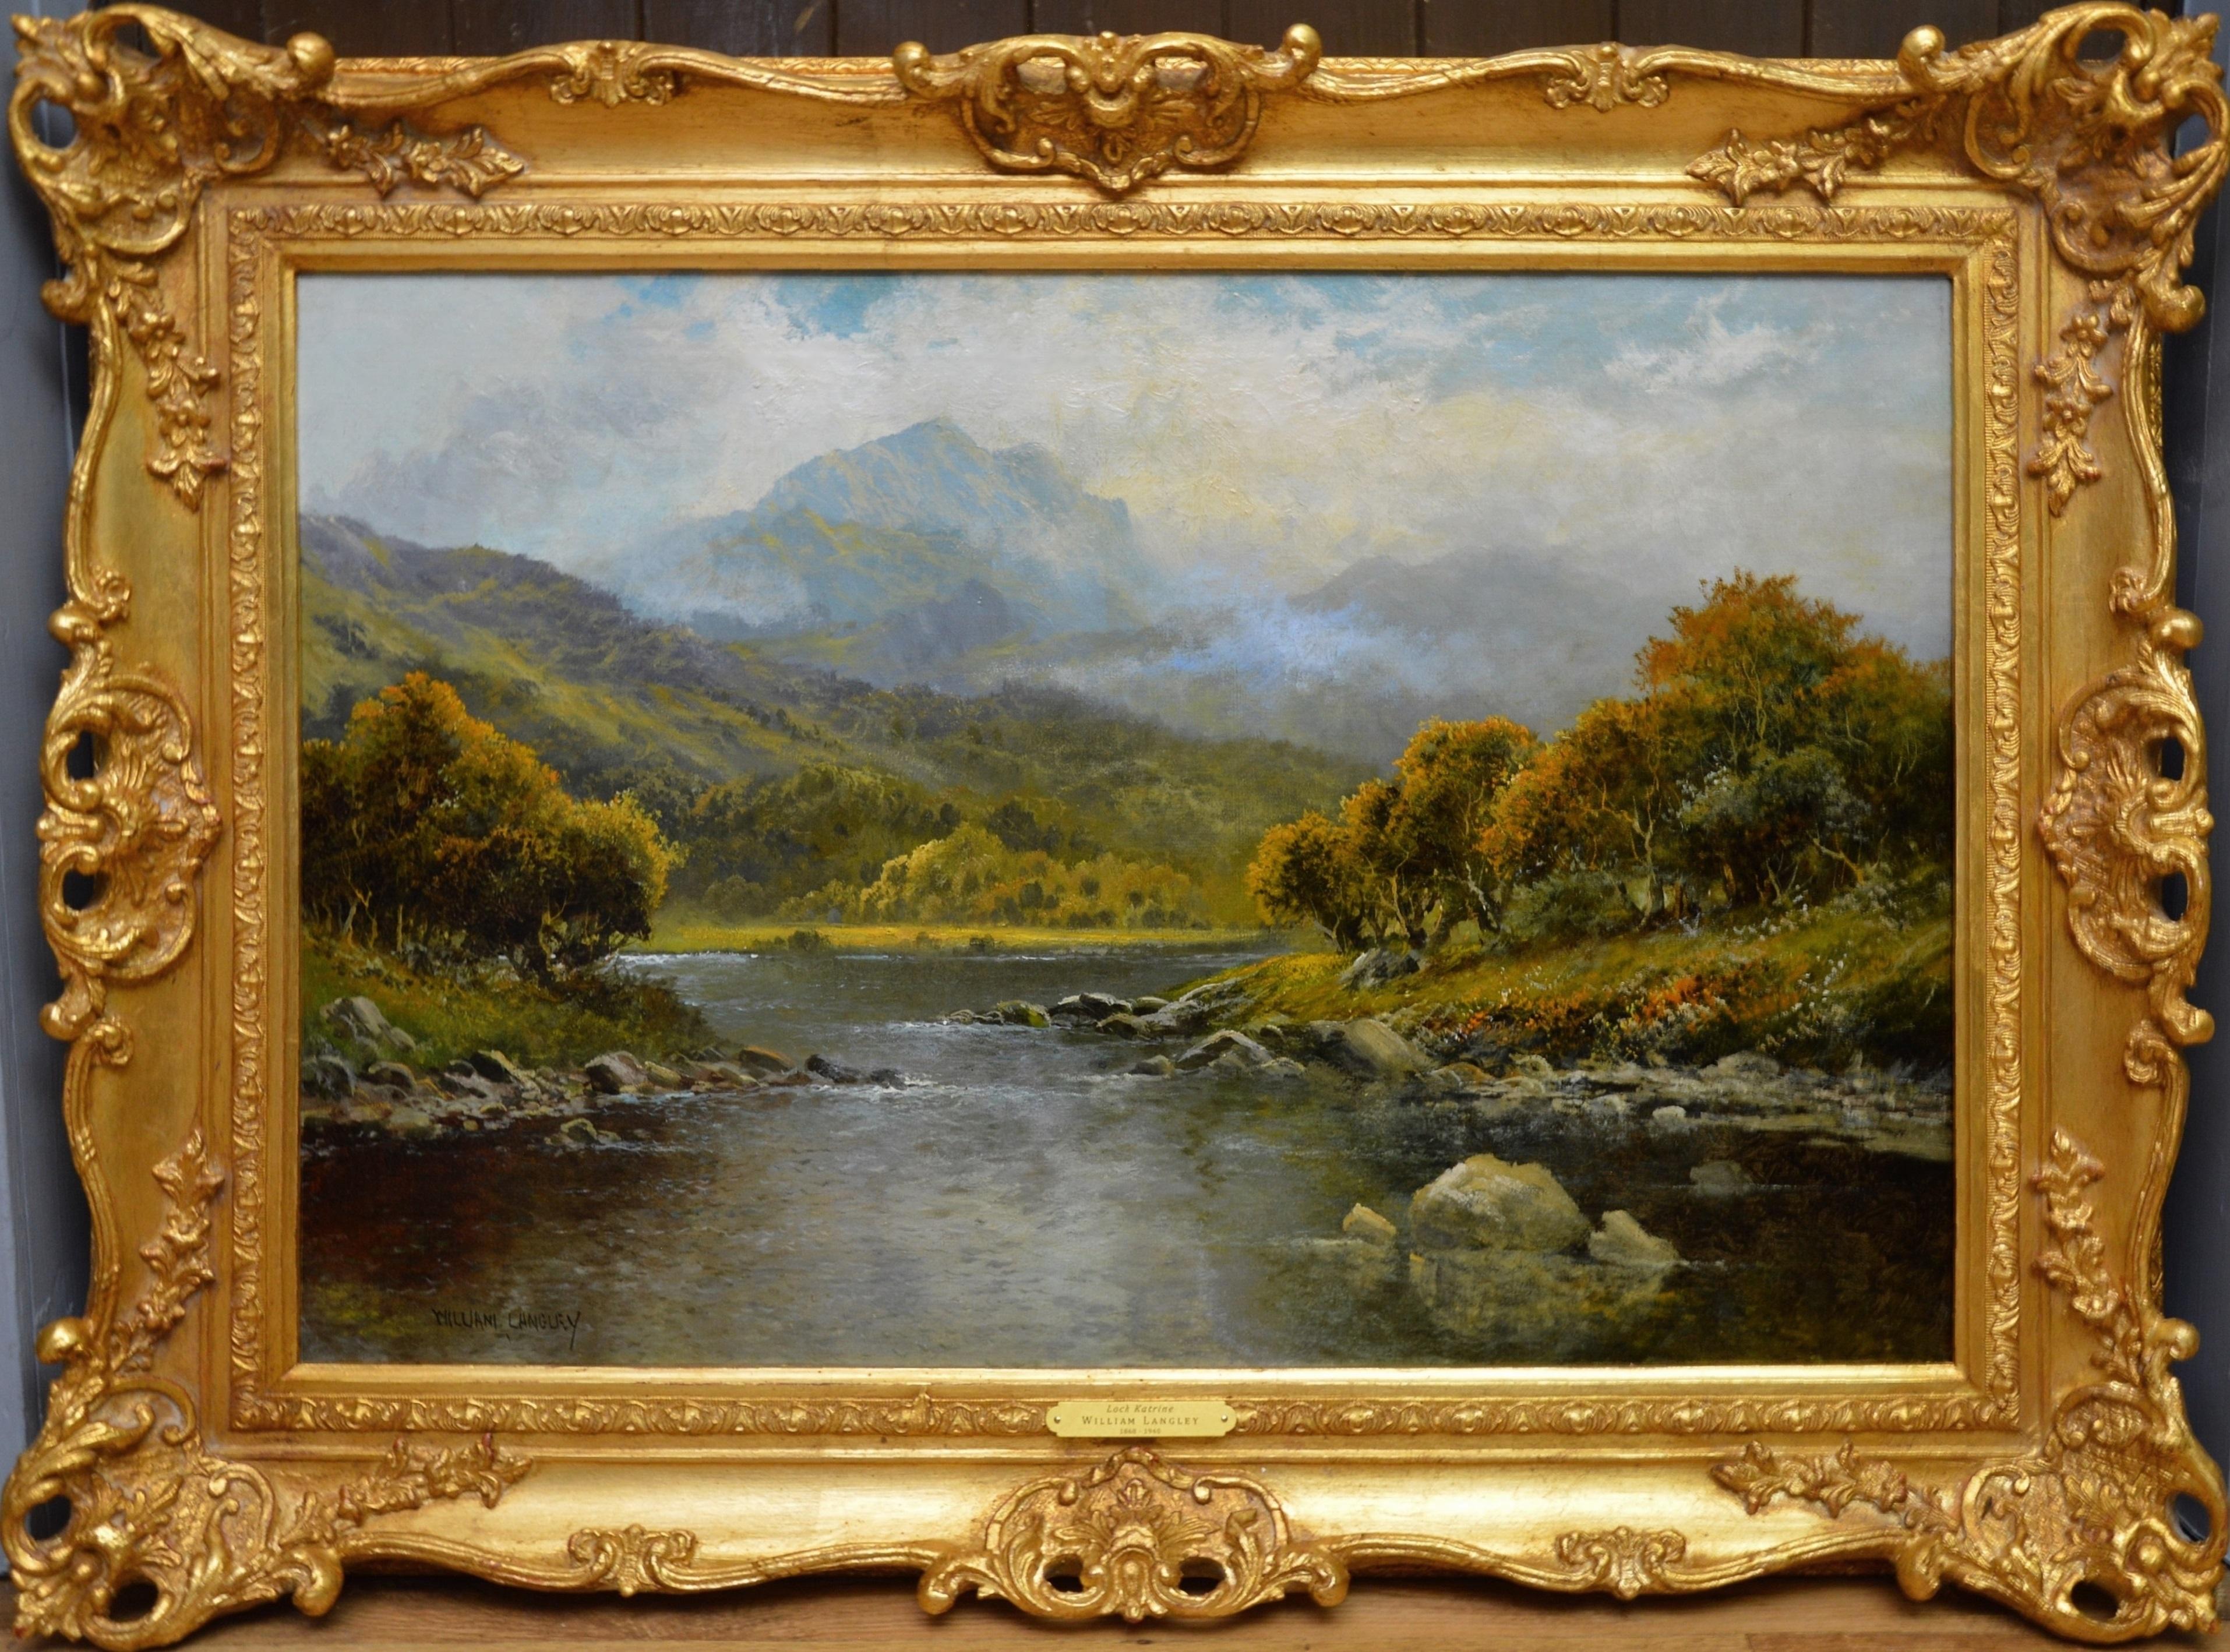 William Langley Landscape Painting - Loch Katrine - 19th Century Landscape Oil Painting of Scottish Highlands